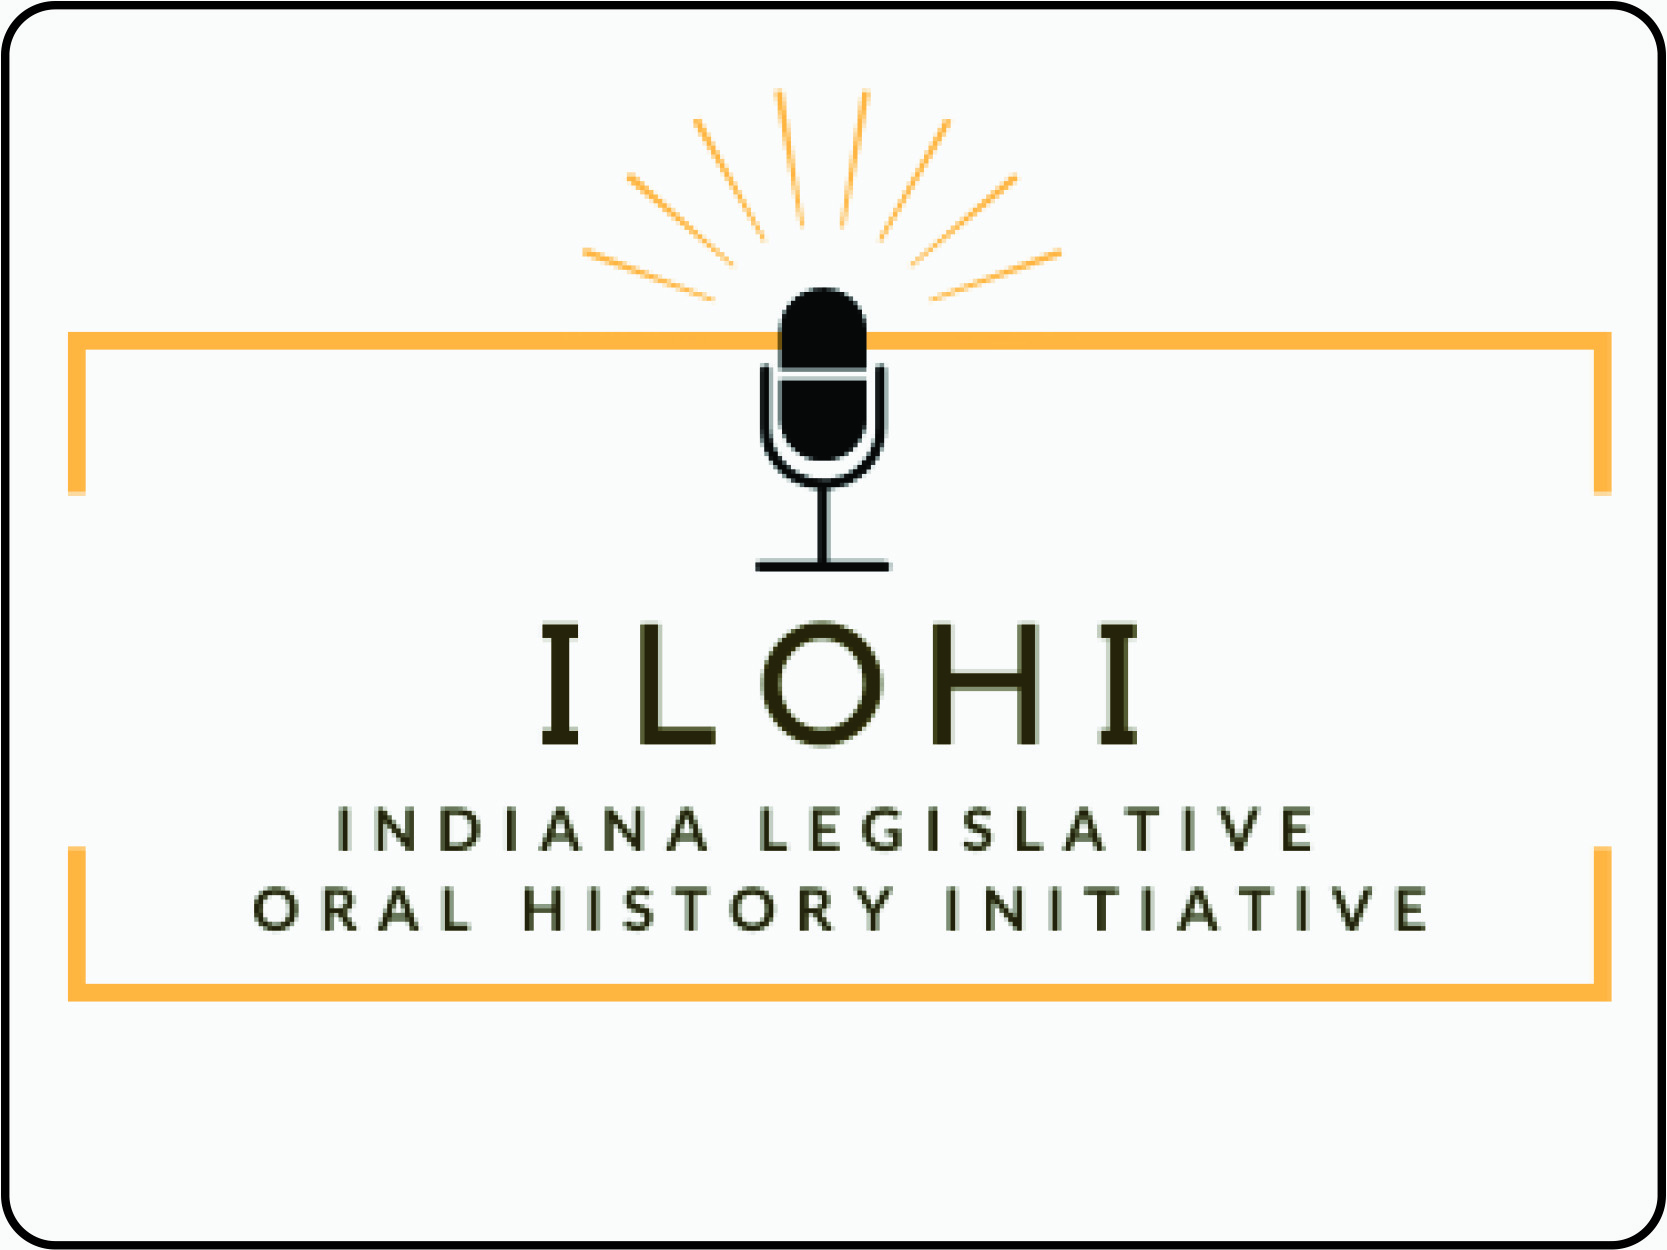 ILOHI Indiana Legislative Oral History Initiative